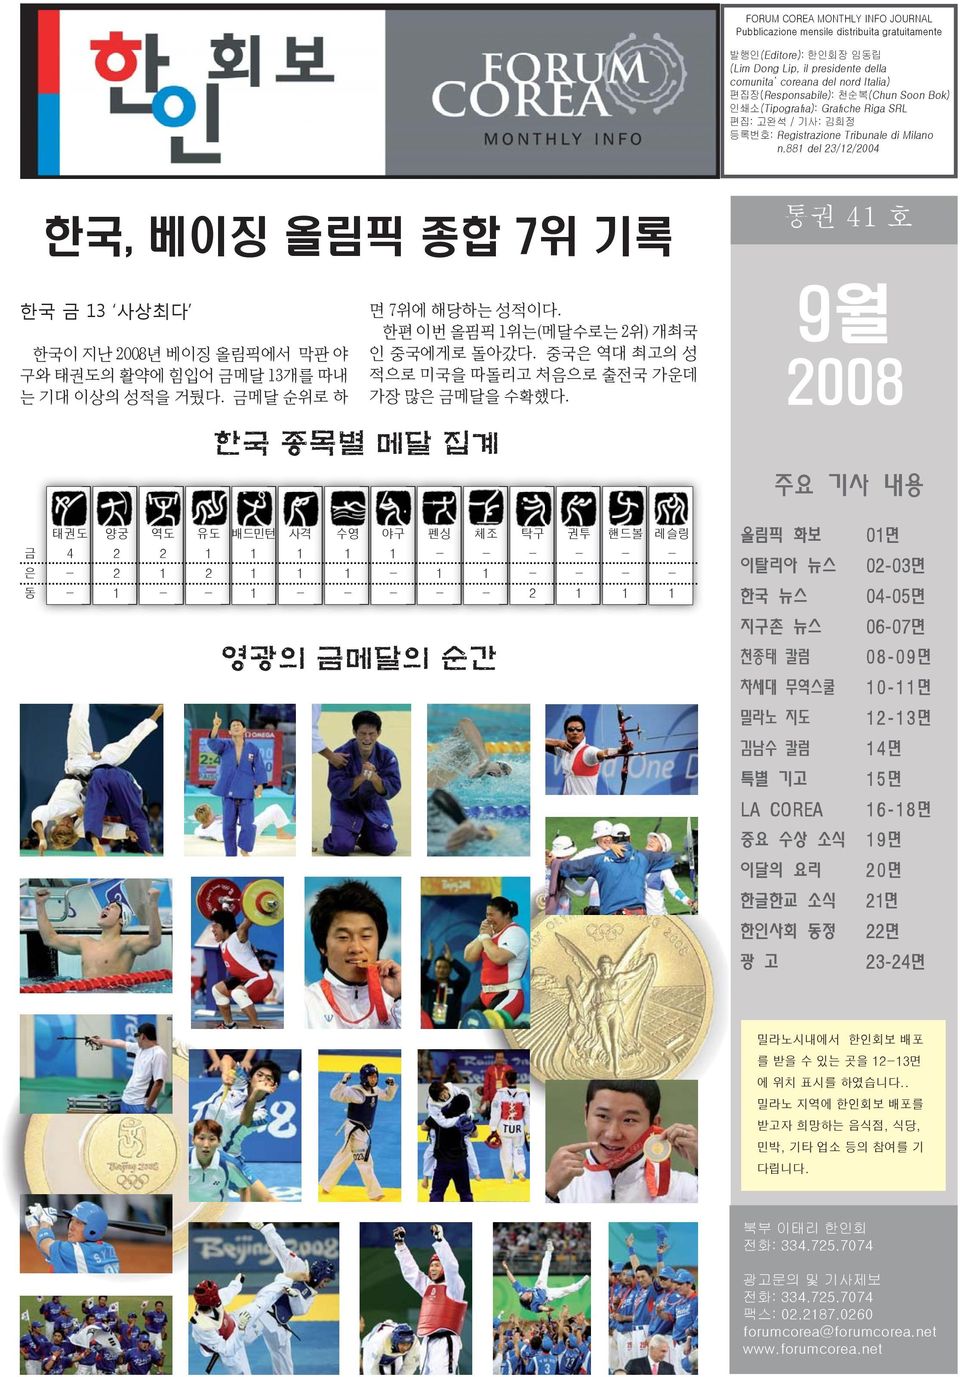 88 del 23/2/2004 한국, 베이징 올림픽 종합 7위 기록 한국 금 3 사상최다 한국이 지난 2008년 베이징 올림픽에서 막판 야 구와 태권도의 활약에 힘입어 금메달 3개를 따내 는 기대 이상의 성적을 거뒀다. 금메달 순위로 하 한국 종목별 메달 집계 면 7위에 해당하는 성적이다.